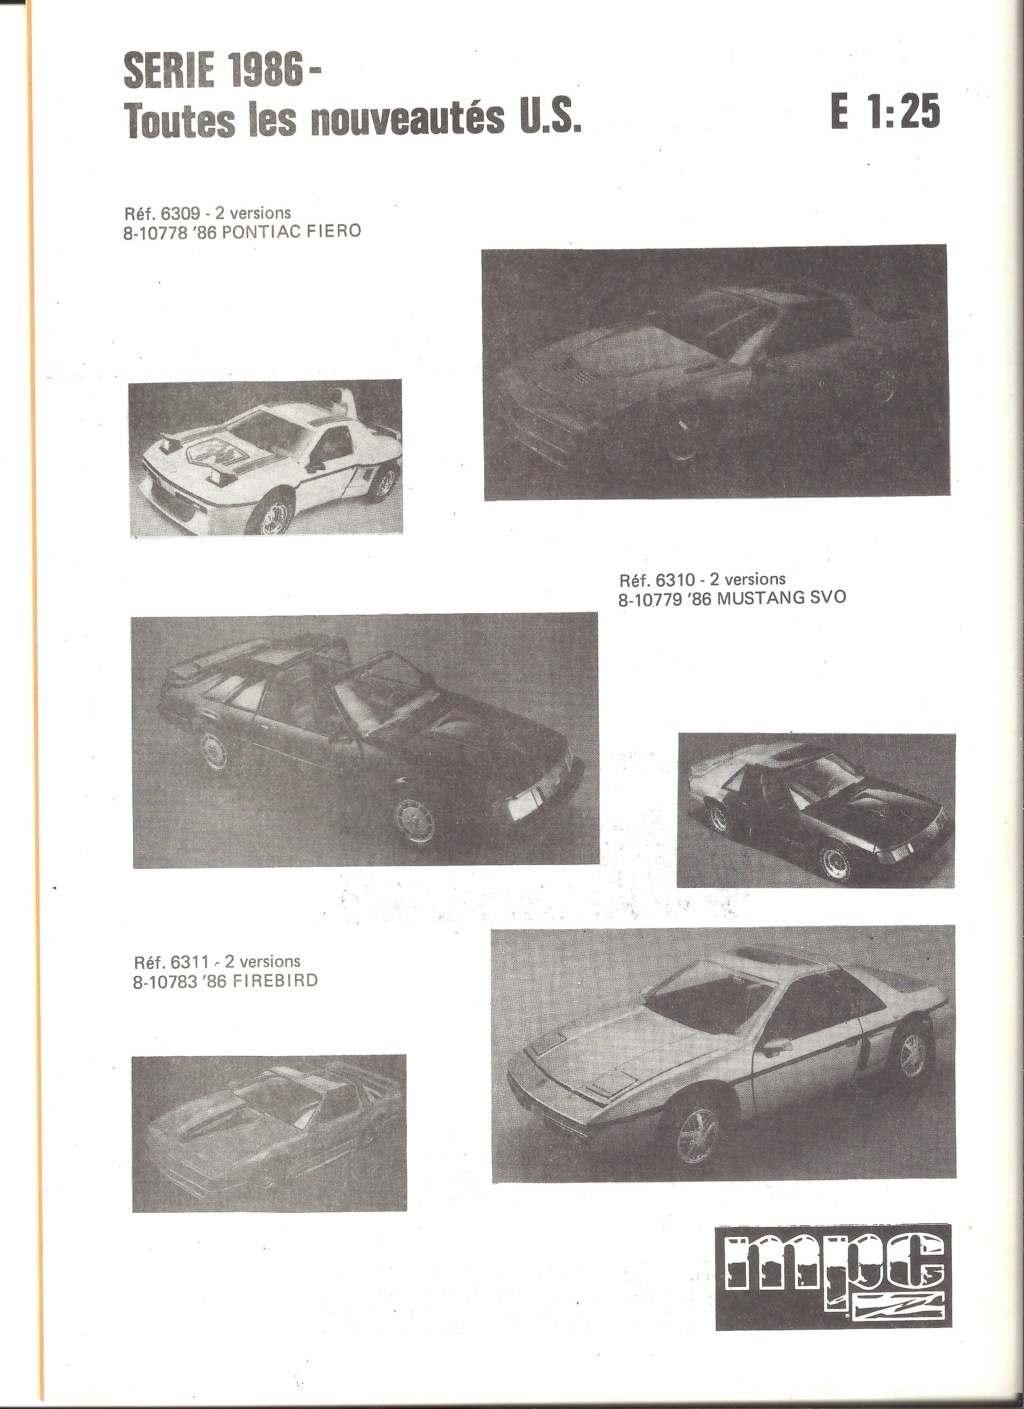 [SPI KAGER 1986] Catalogue JO-HAN, BADGER, MODEL POWER, MPC 1986  Spi_ka35